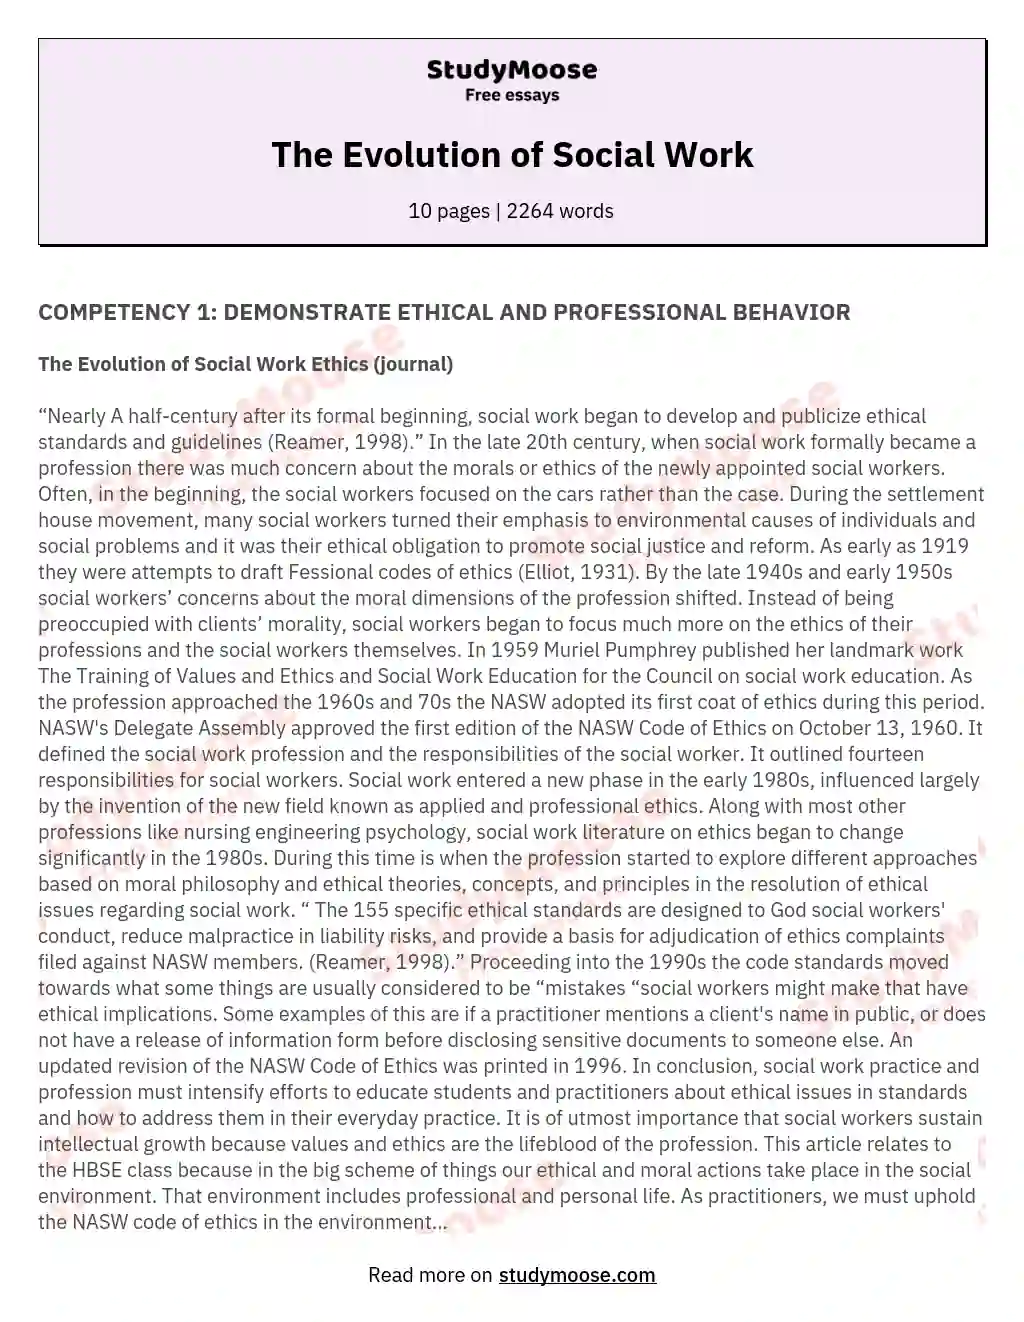 The Evolution of Social Work essay